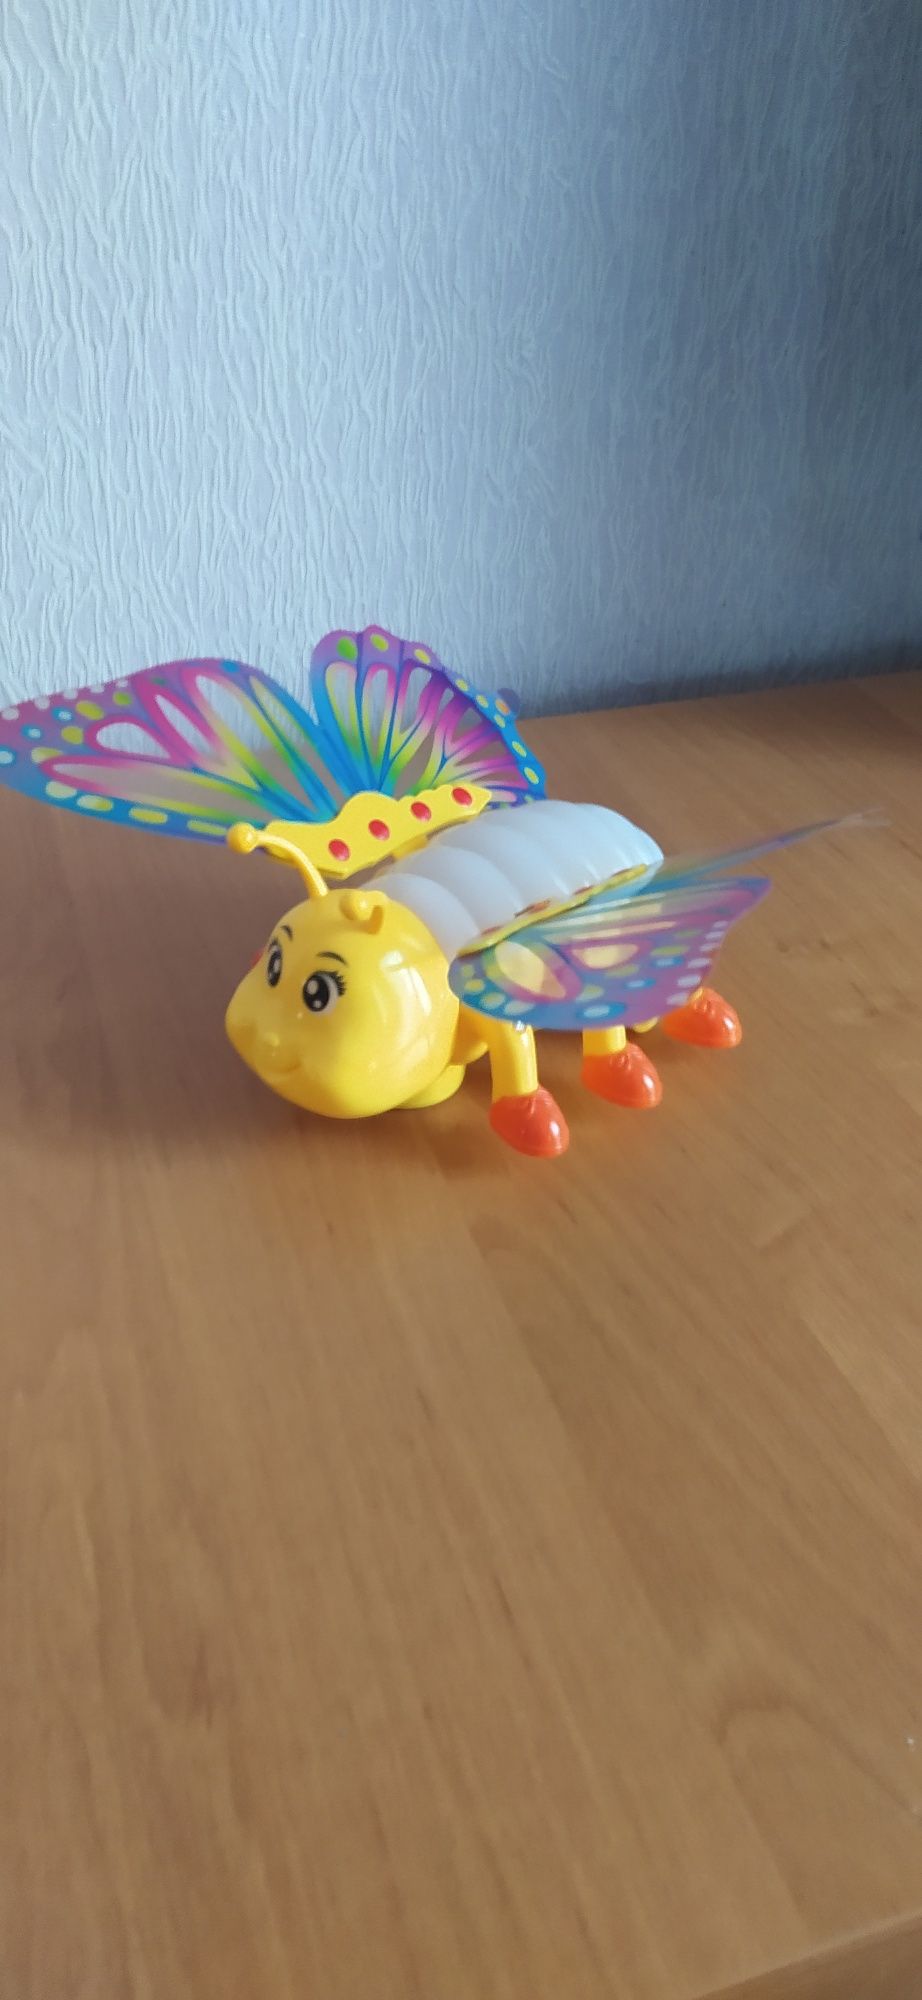 Музыкальная игрушка "Бабочка" DL-298, свет, звук